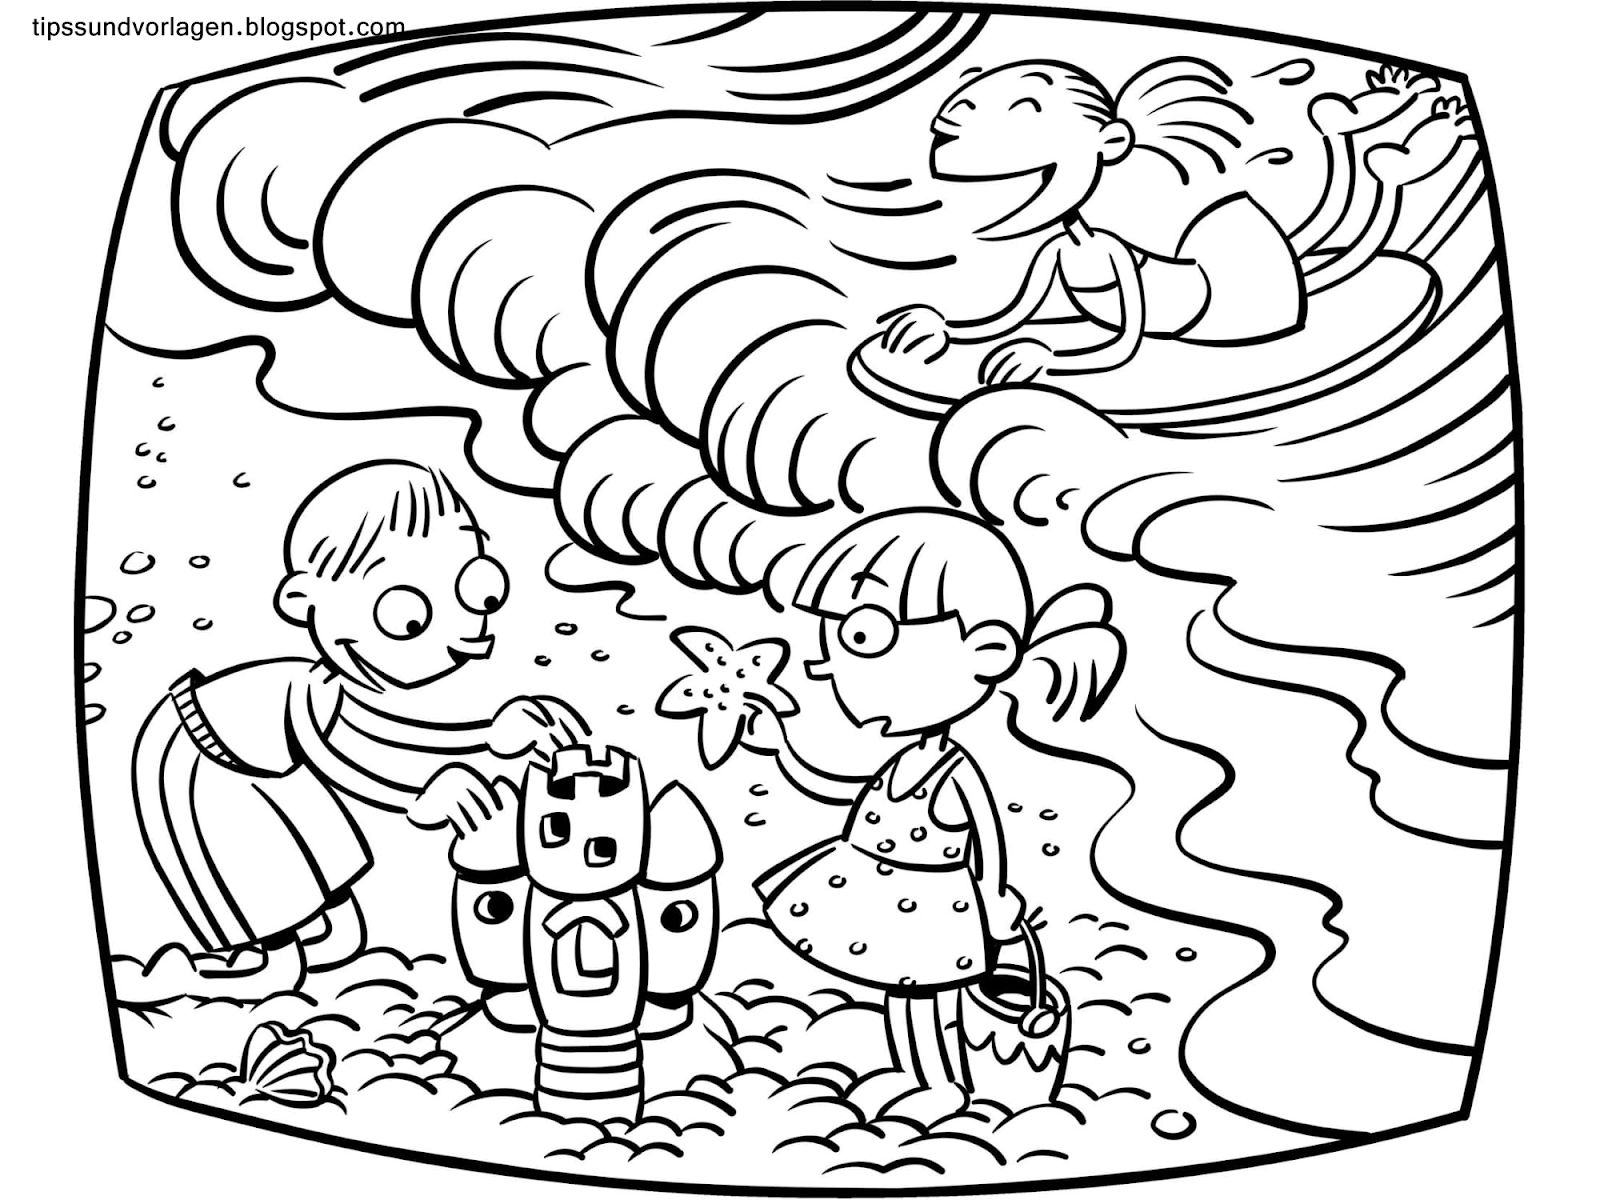 Summer coloring pages for kids 25 - Tipss und Vorlagen